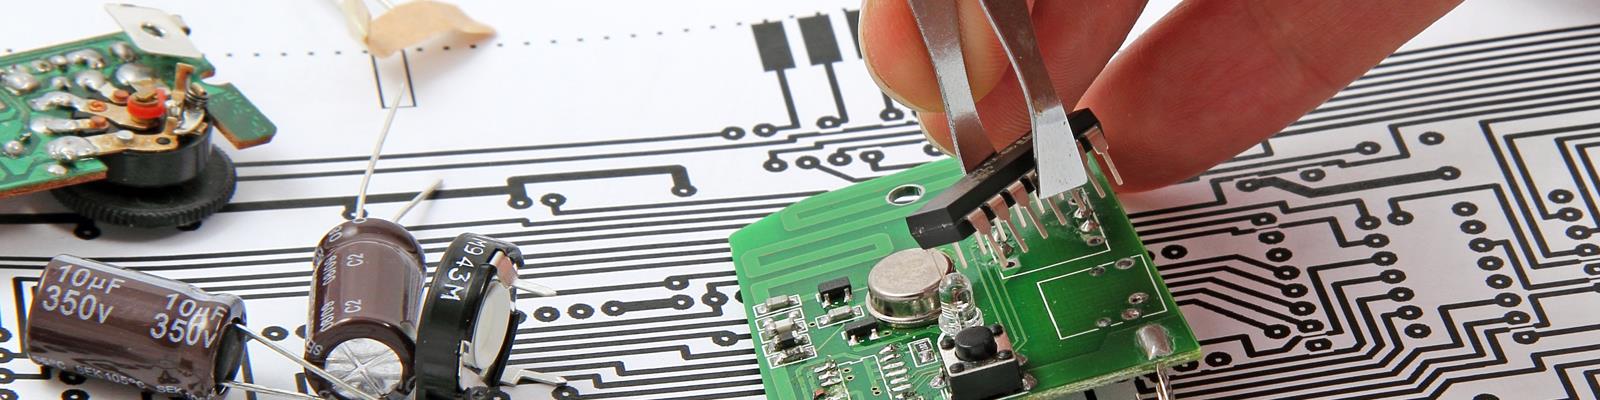 close up of electronics parts